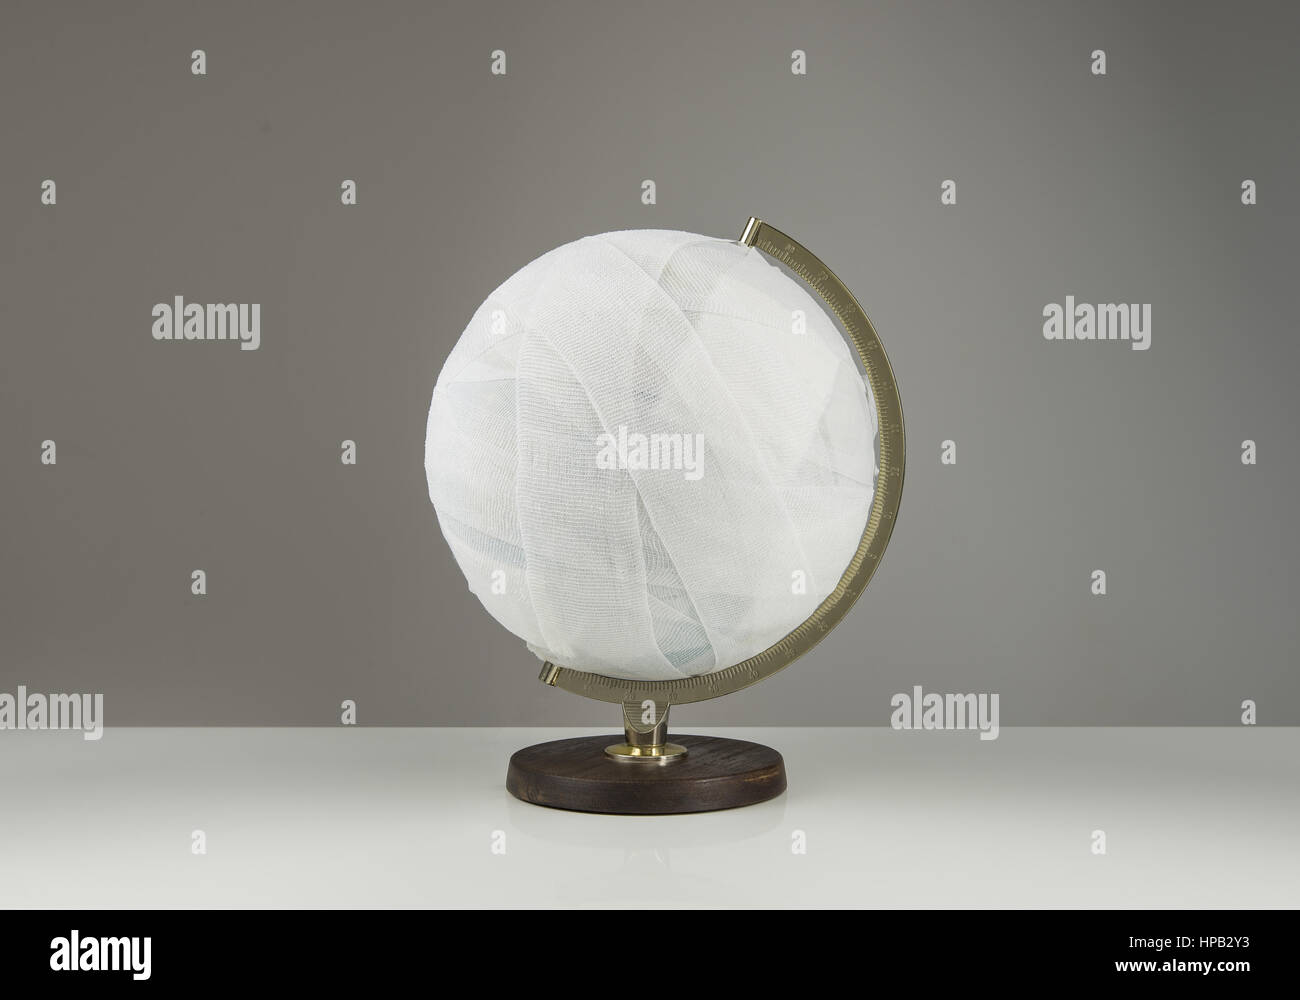 Globus mit verband, symbolbild Banque D'Images